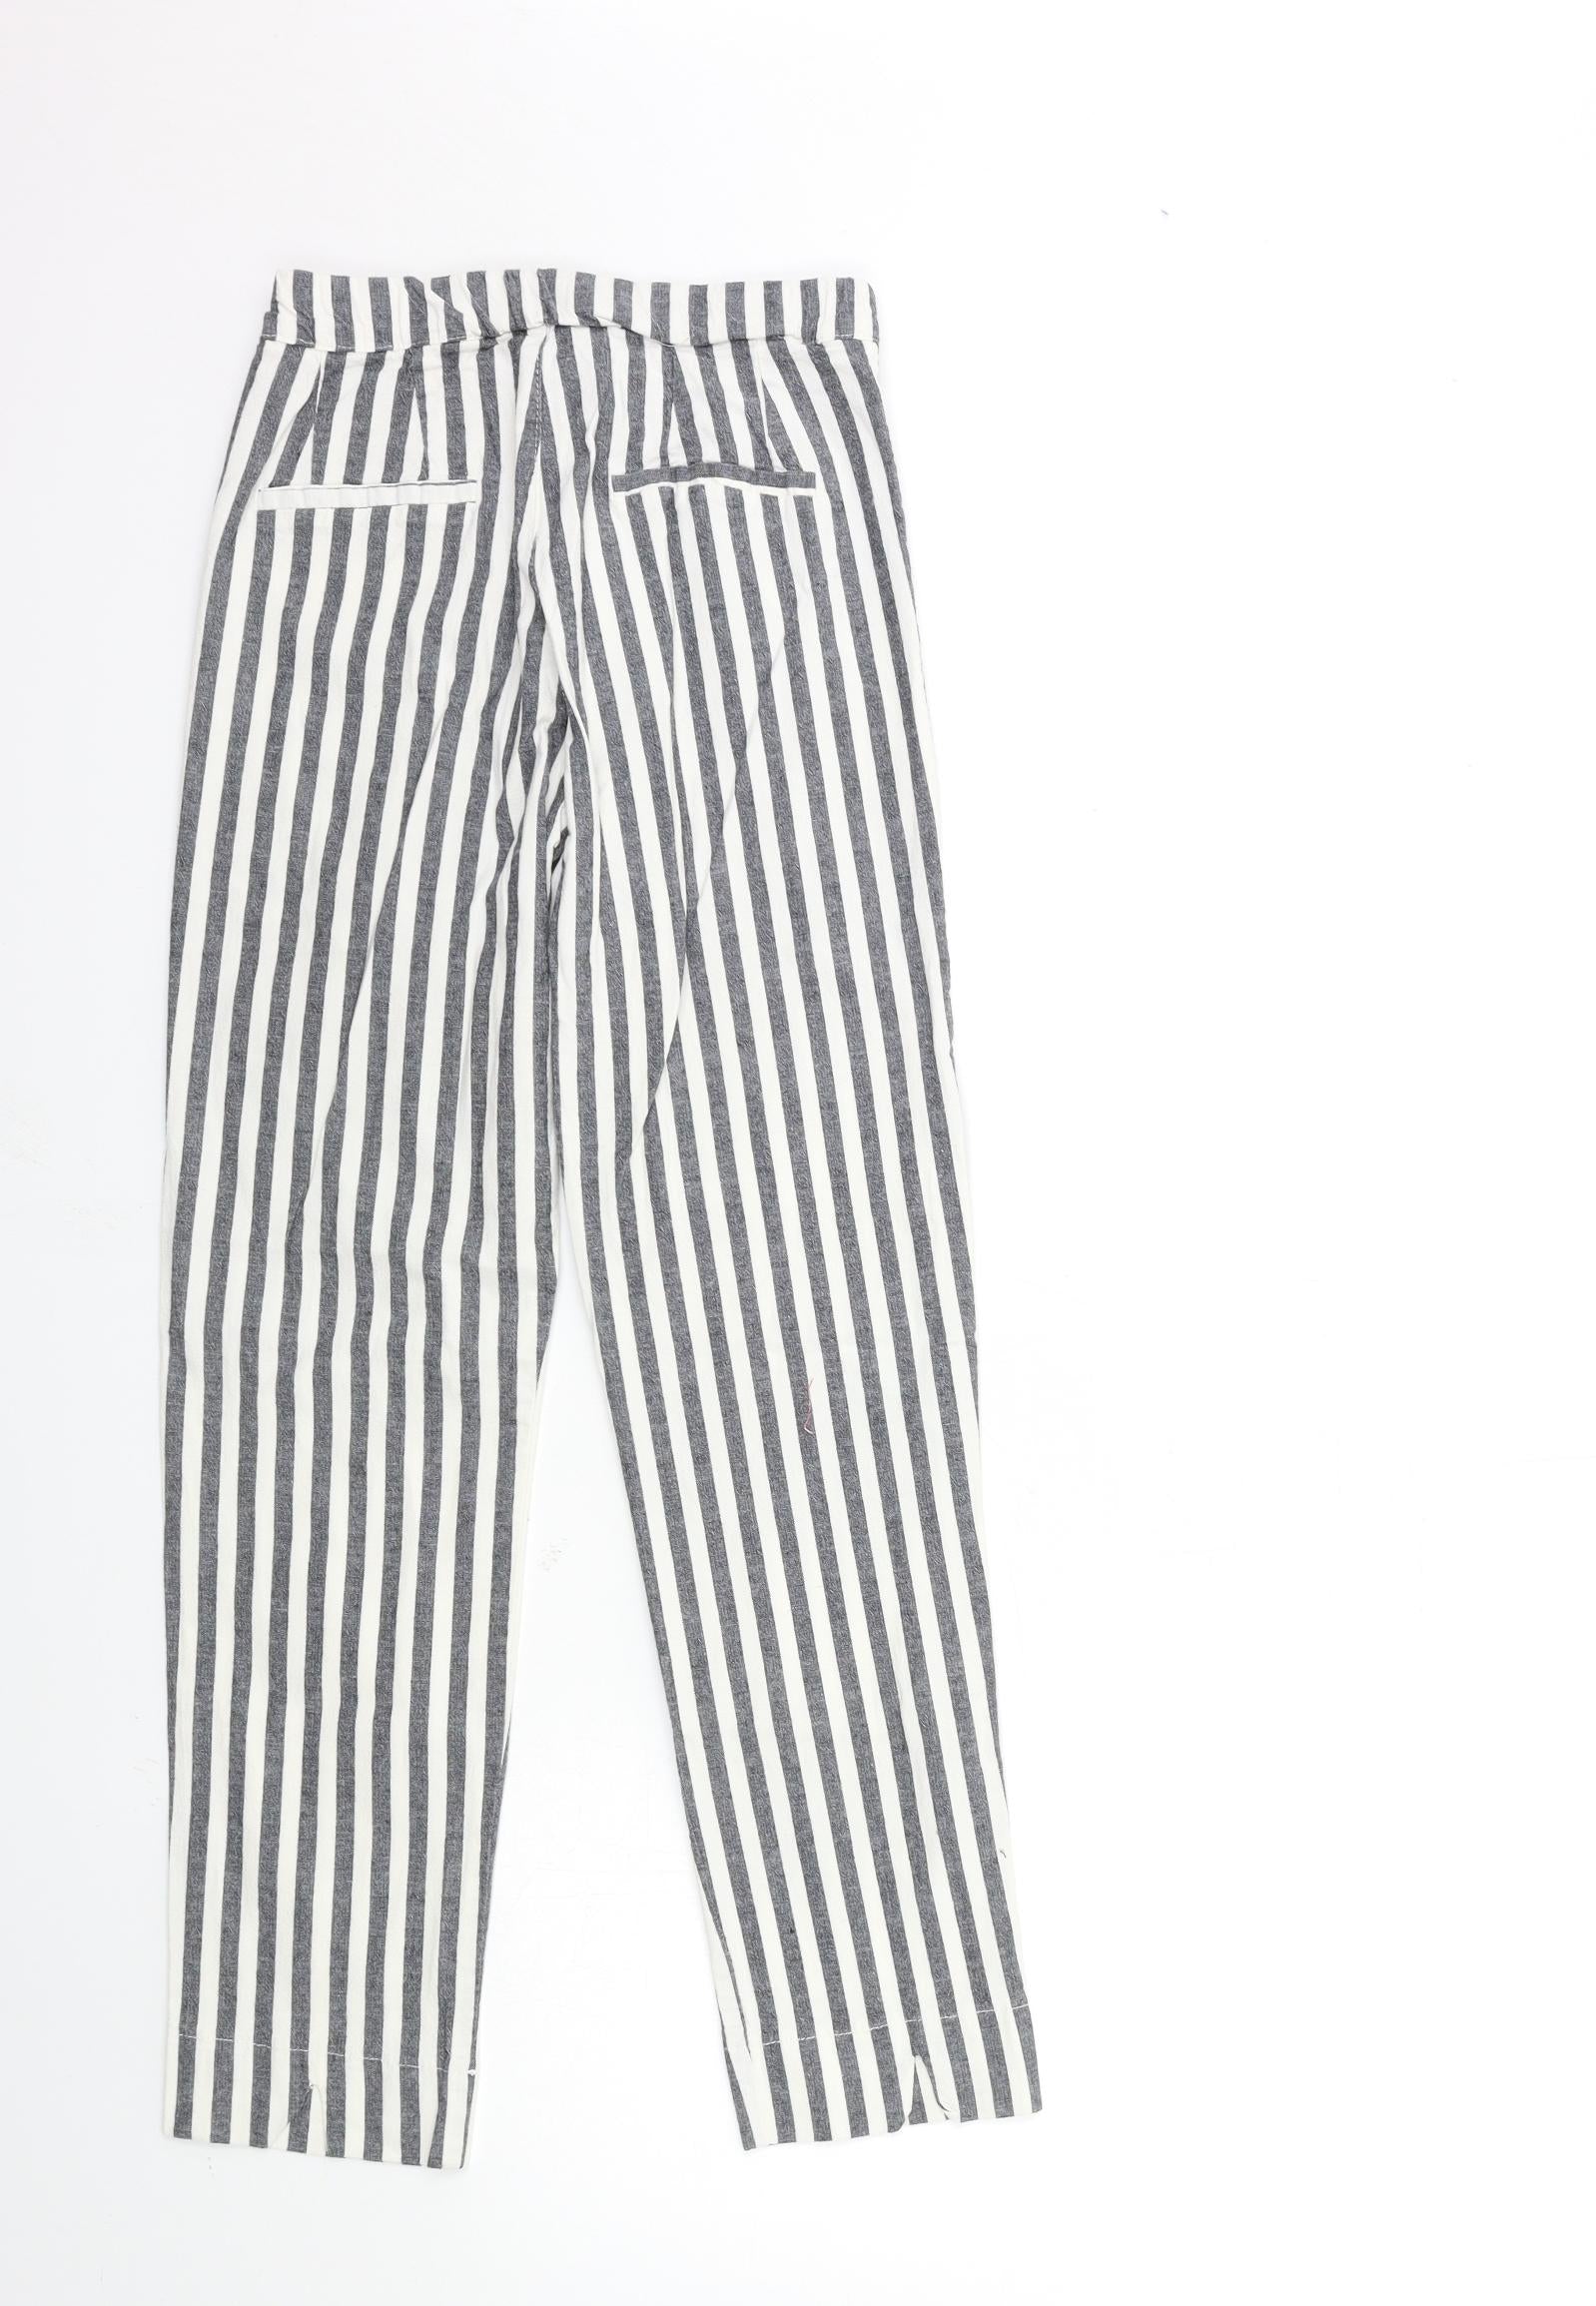 Brandy Melville Blue Striped Pants Factory Sale - www.illva.com 1693160817